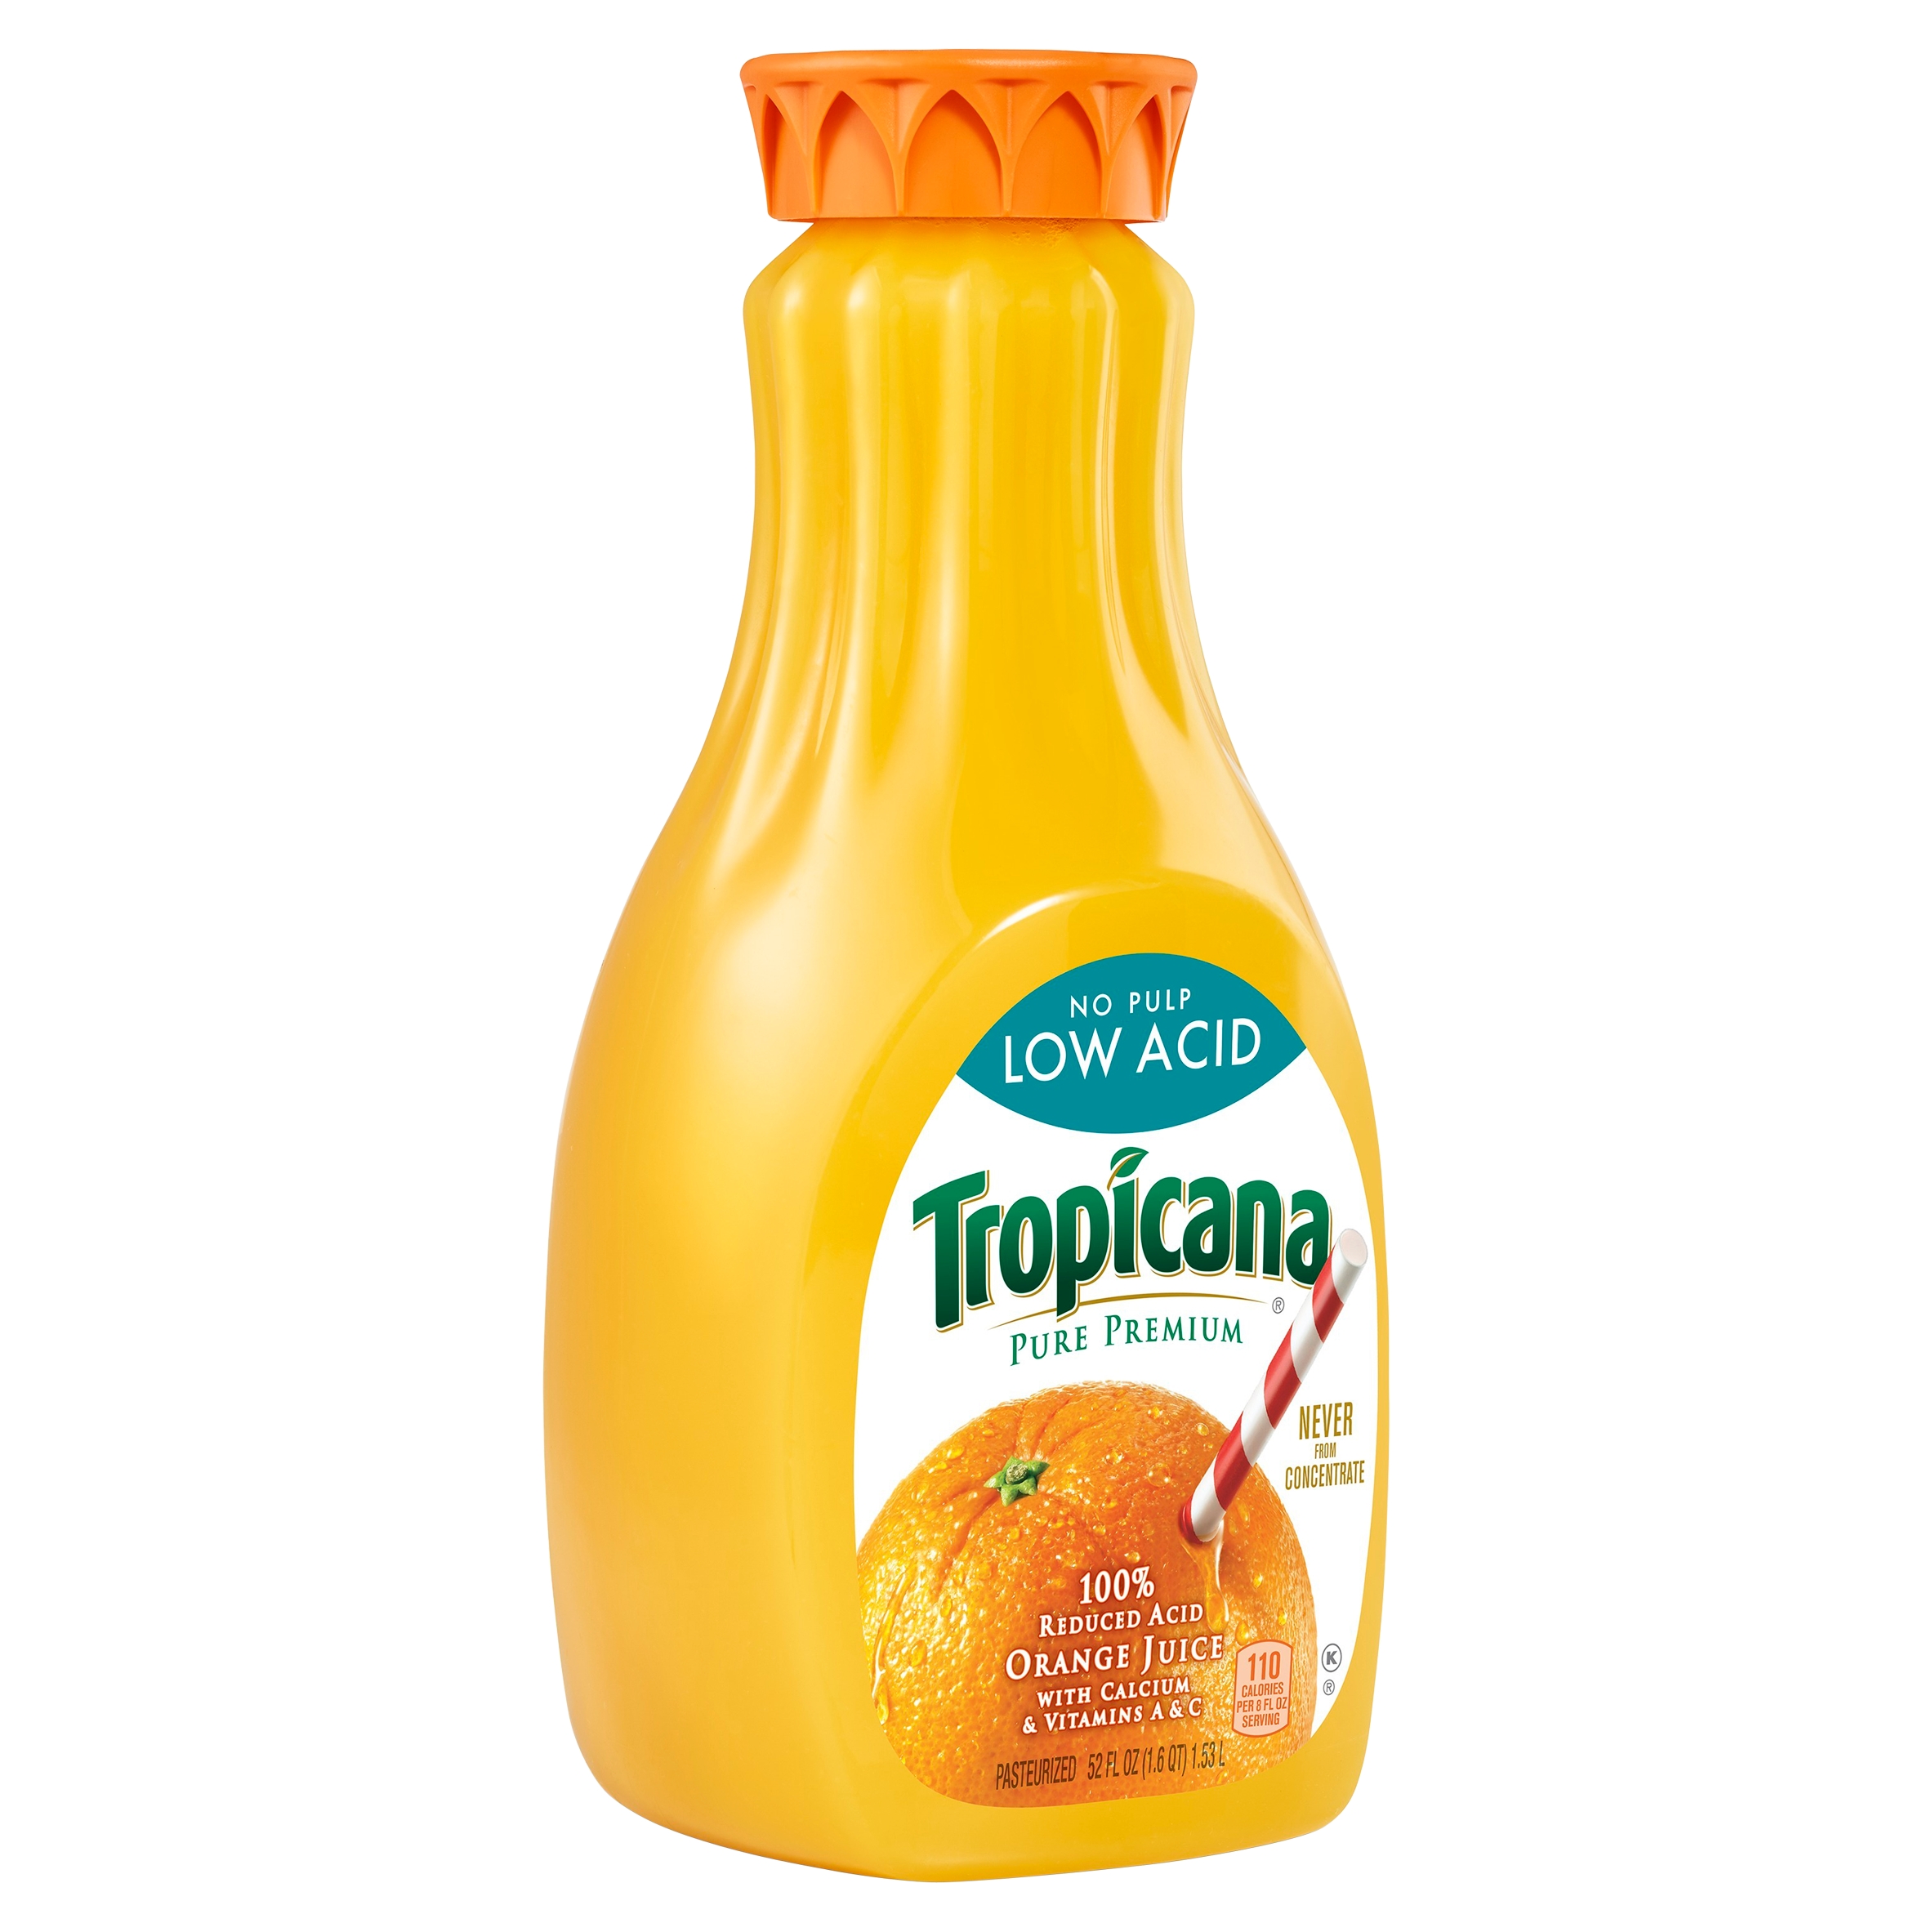 Tropicana Pure Premium Low Acid 100% Juice Orange No Pulp with Vitamins A and C 52 fl oz Bottle, Fruit Juice - image 1 of 9